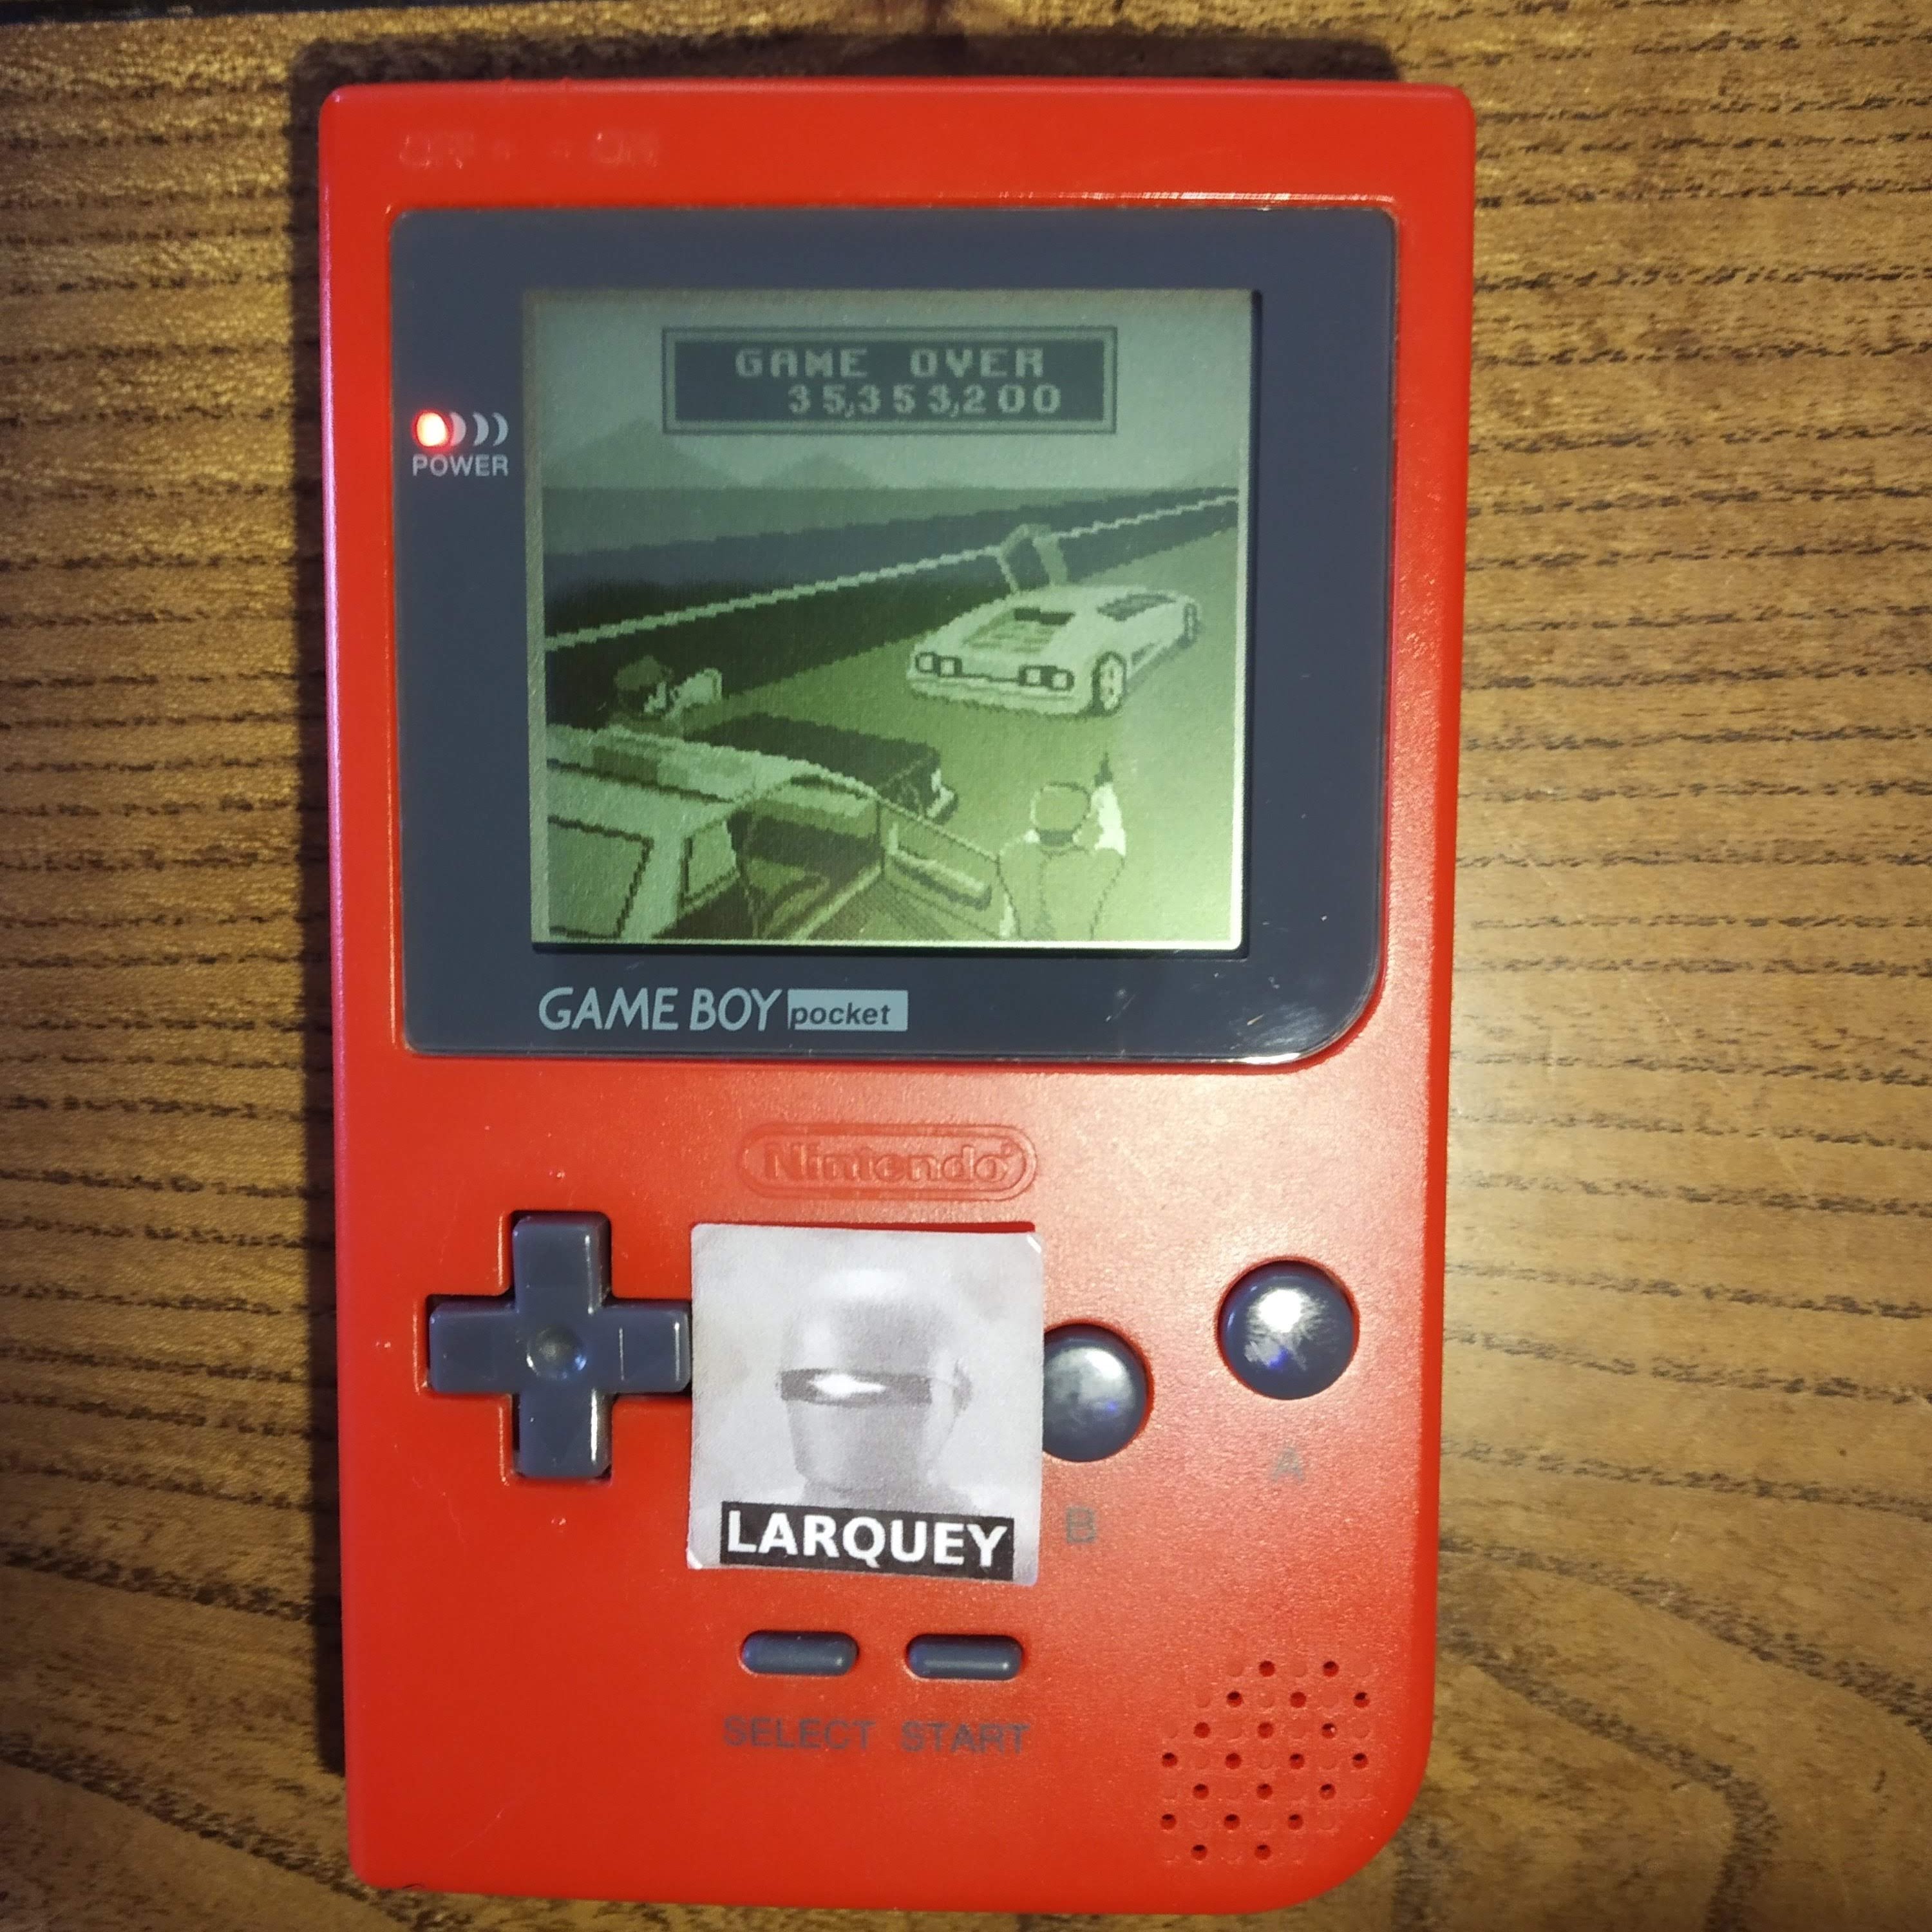 Larquey: The Getaway: High Speed II (Game Boy) 35,353,200 points on 2020-06-04 09:31:20